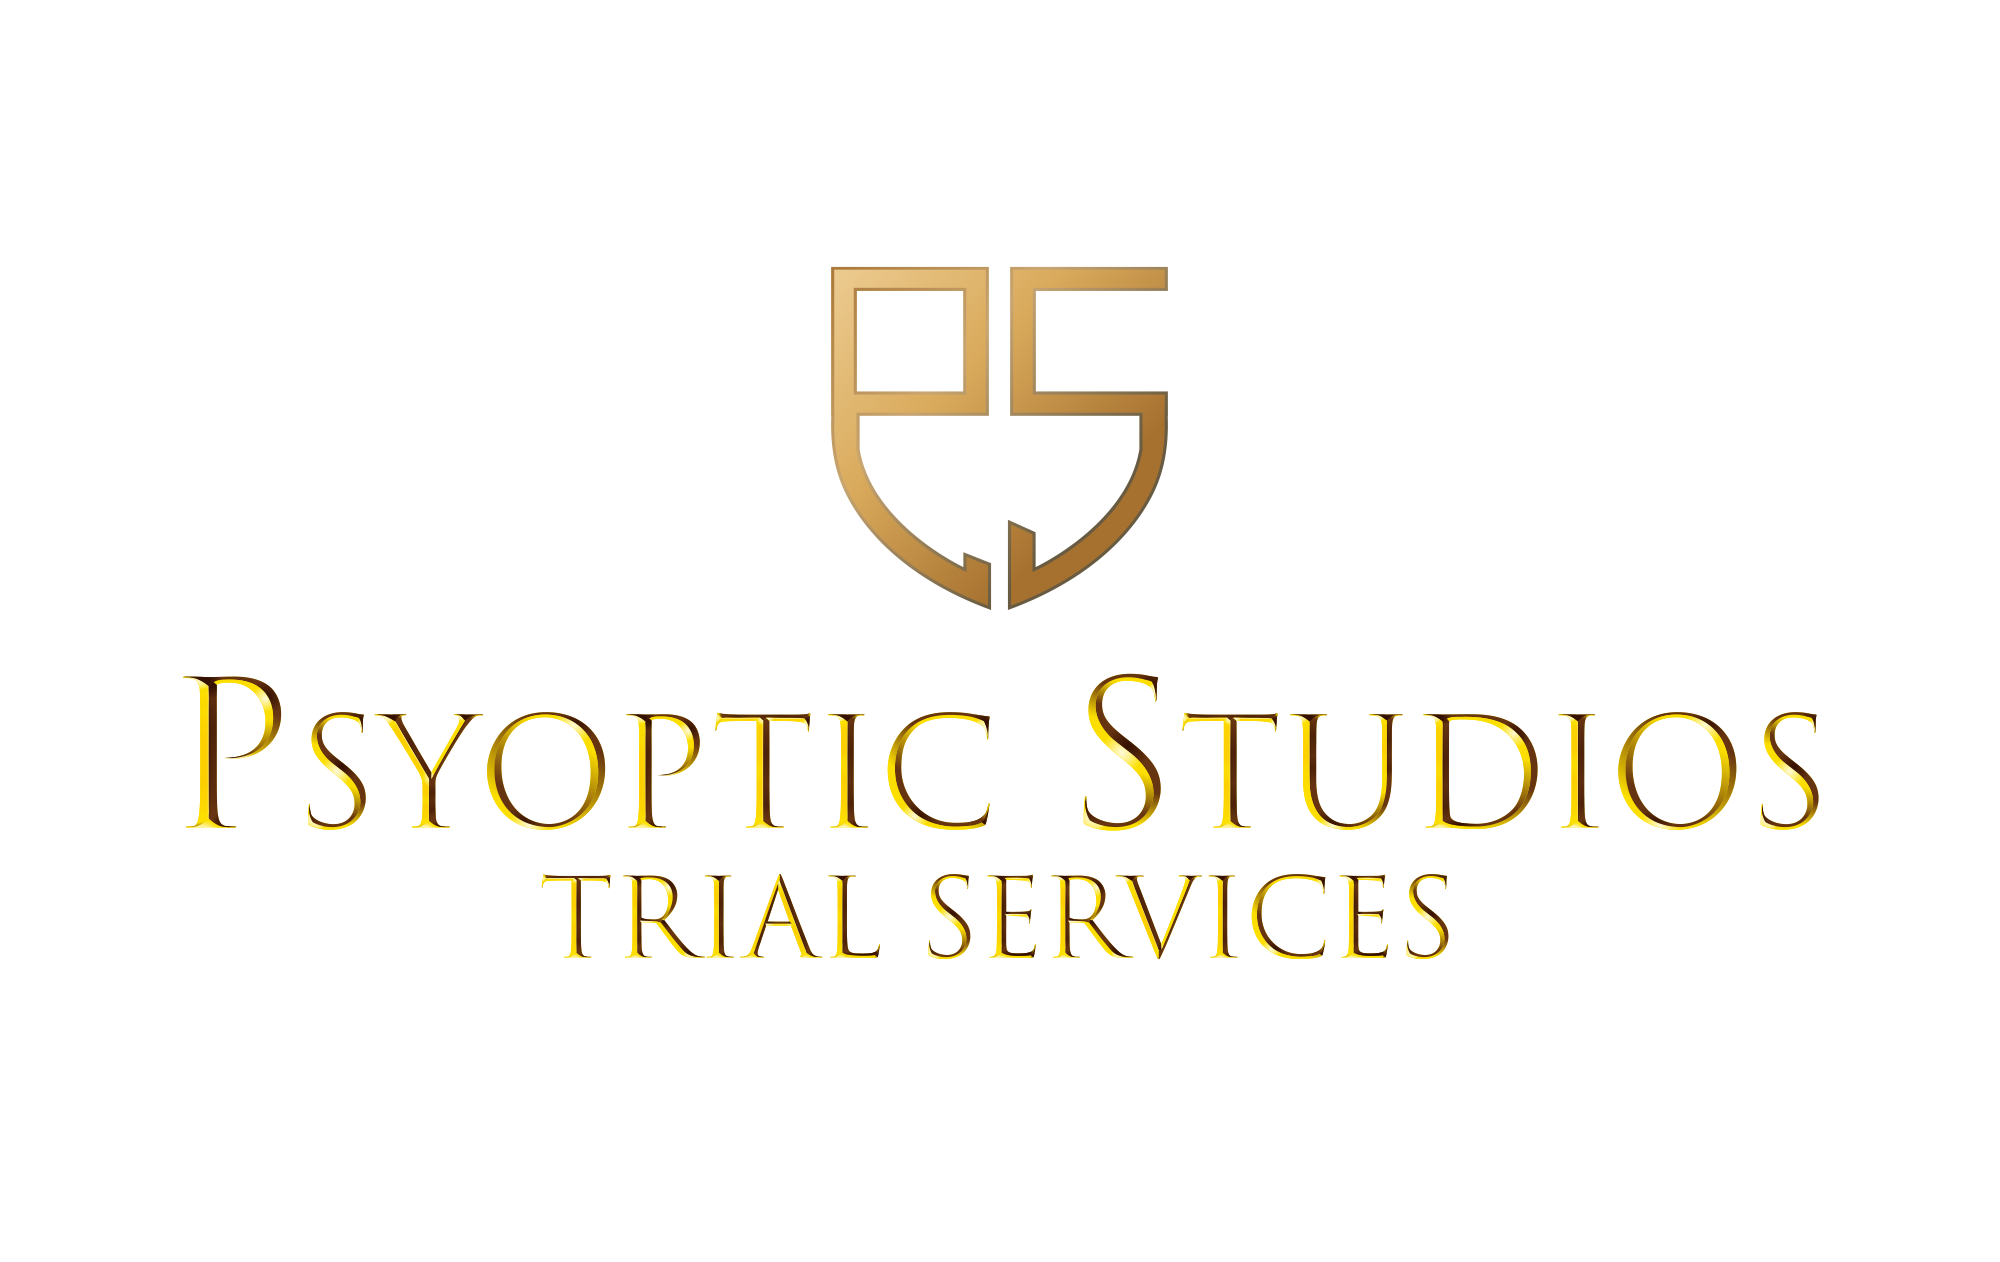 Psyoptic Studios Trial Services